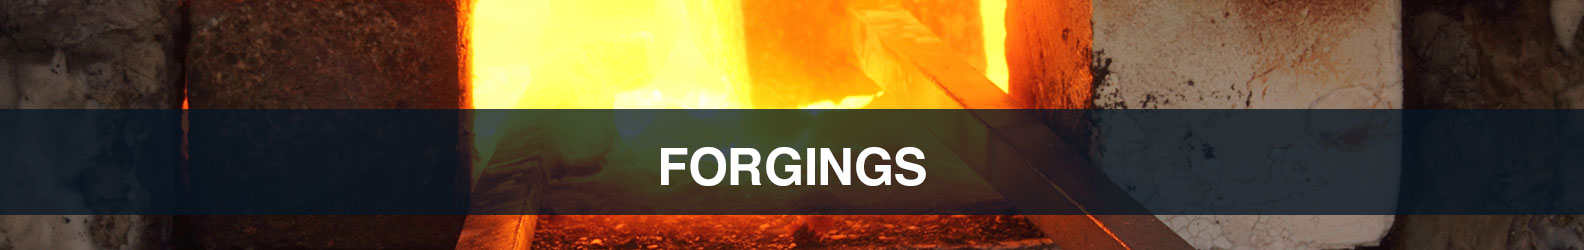 Forgings